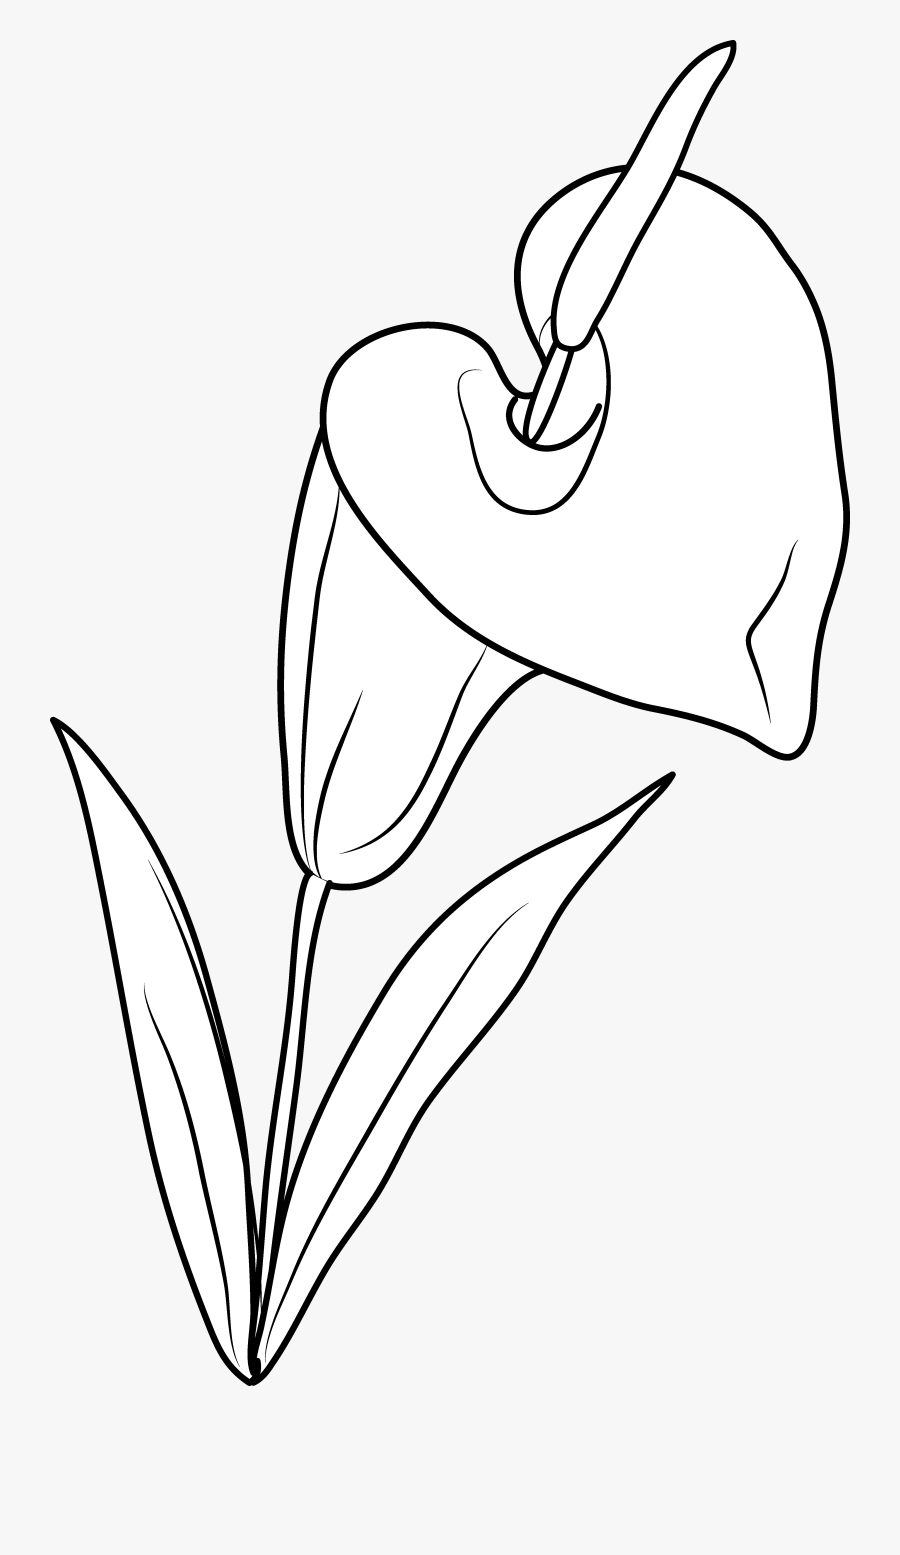 Lily Flower Coloring Page Free Clip Art - Clip Art, Transparent Clipart